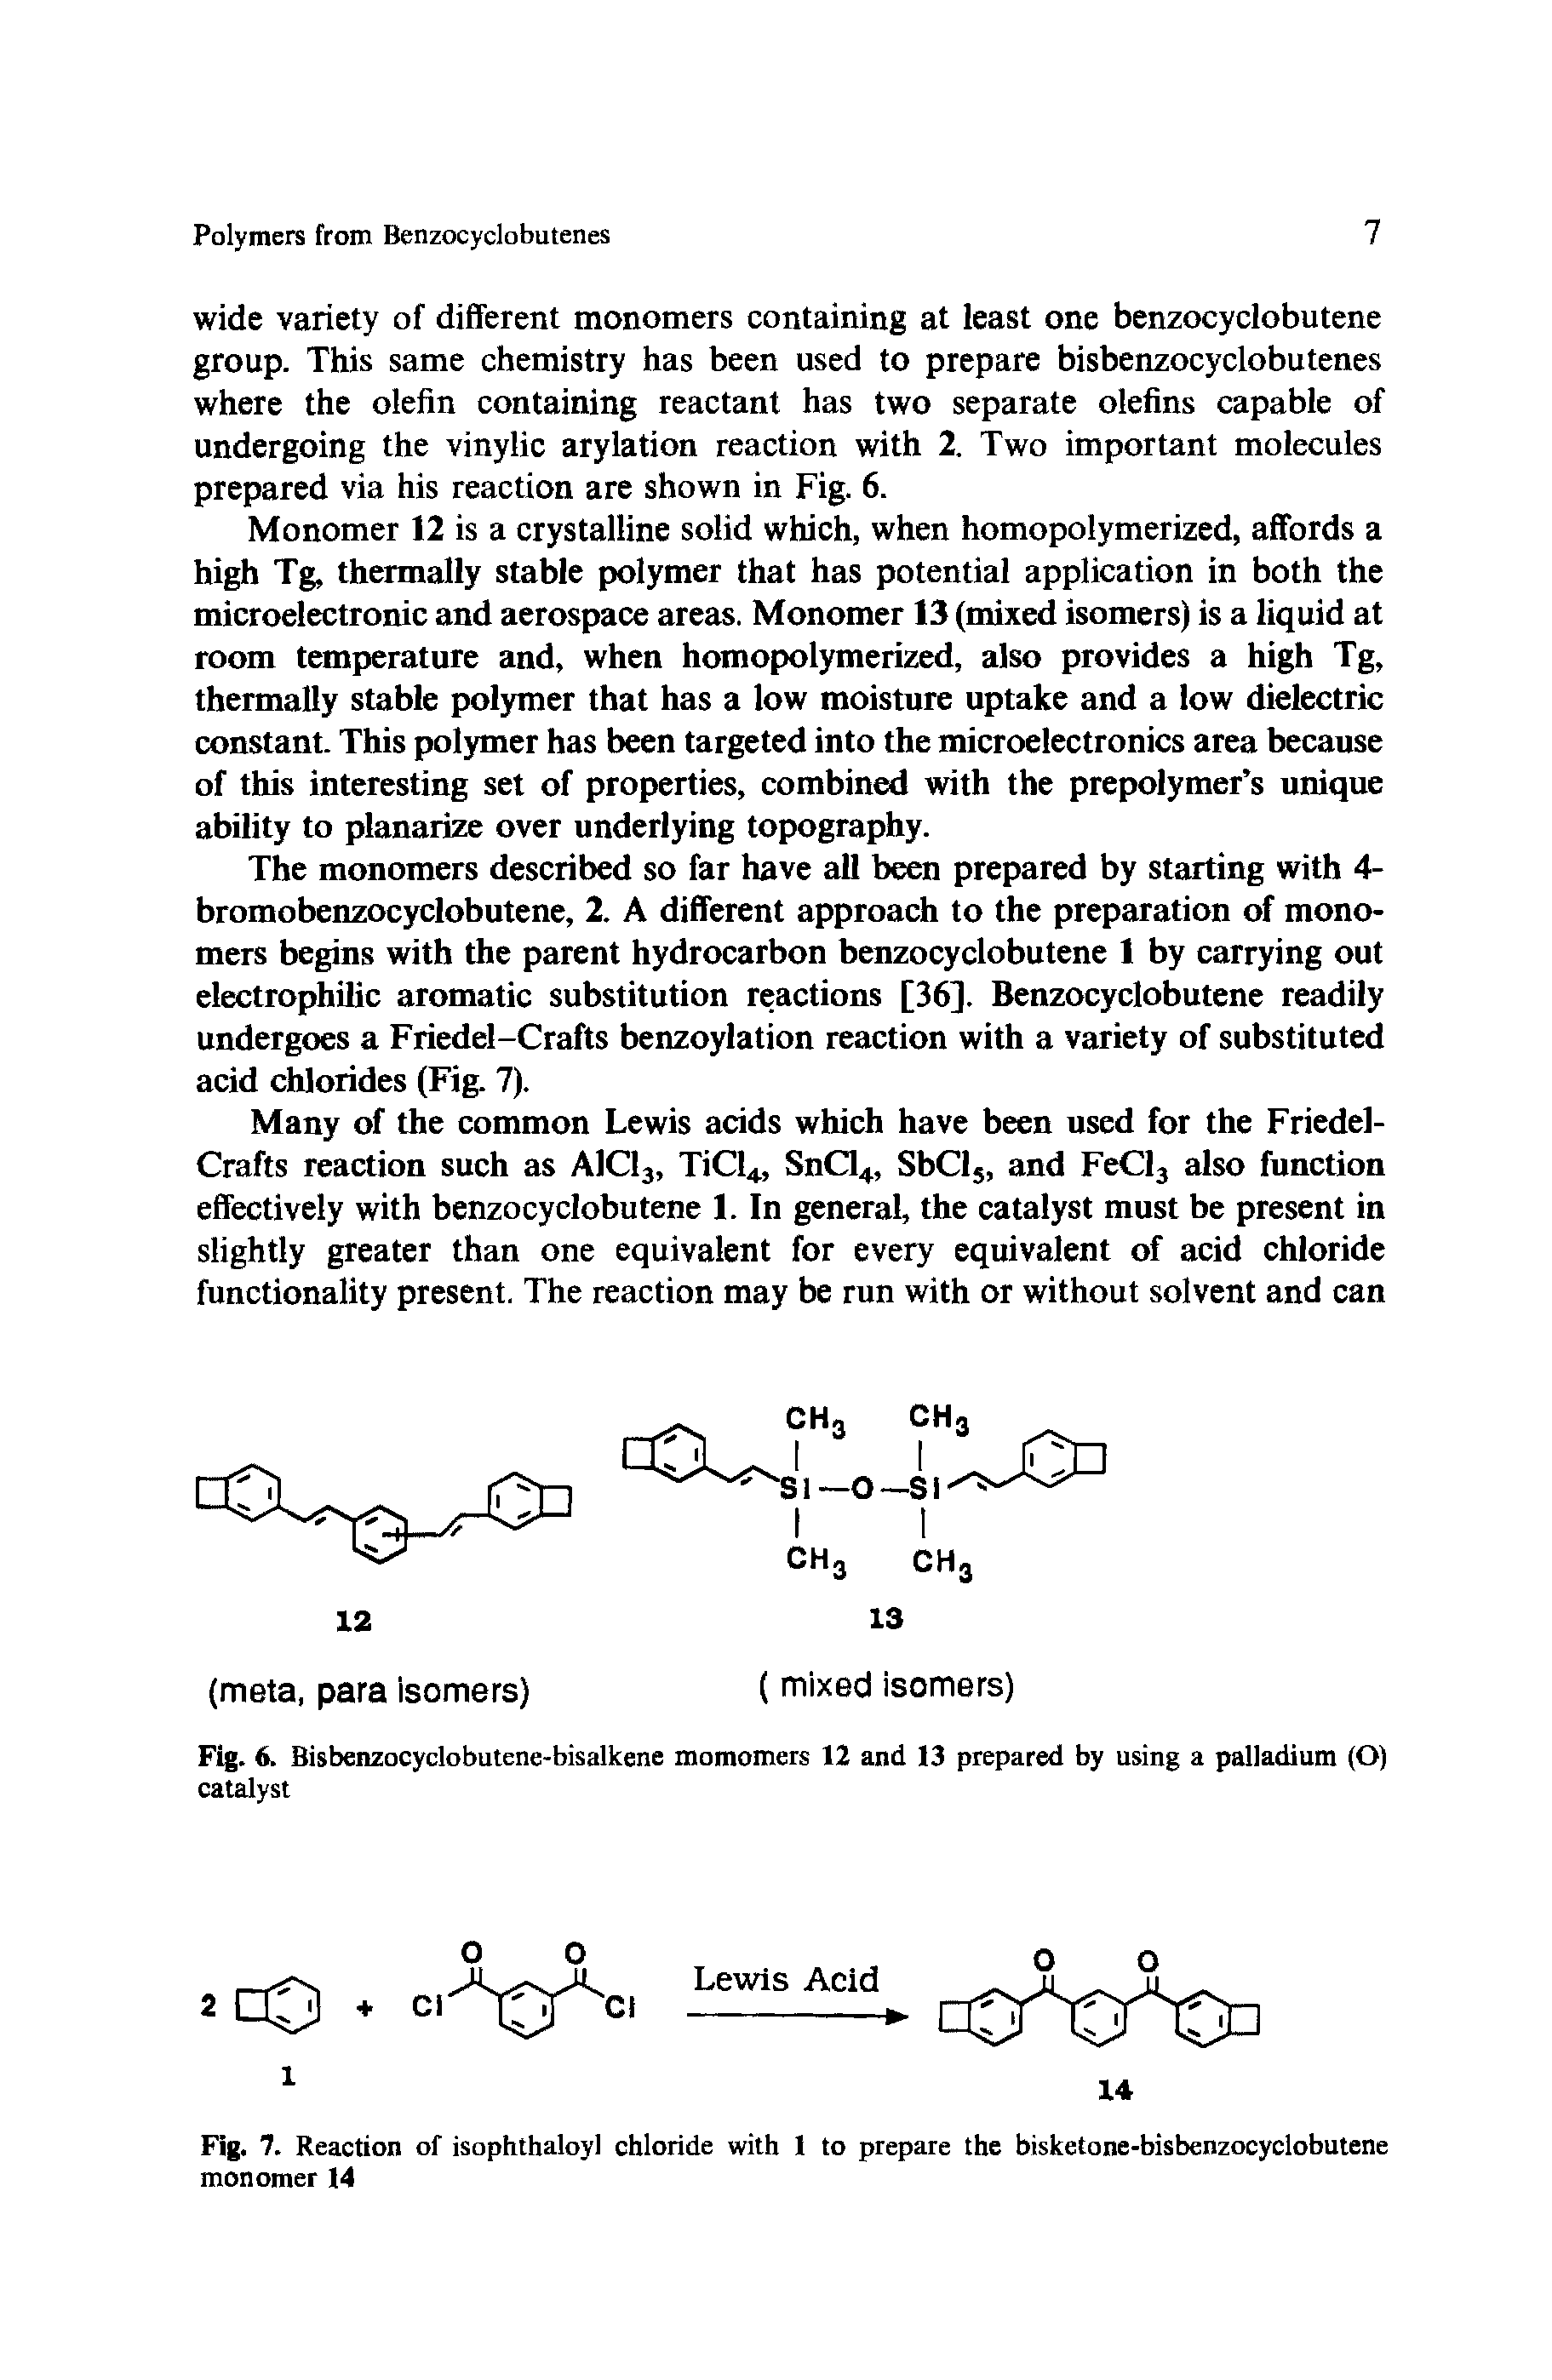 Fig. 7. Reaction of isophthaloyl chloride with 1 to prepare the bisketone-bisbenzocyclobutene monomer 14...